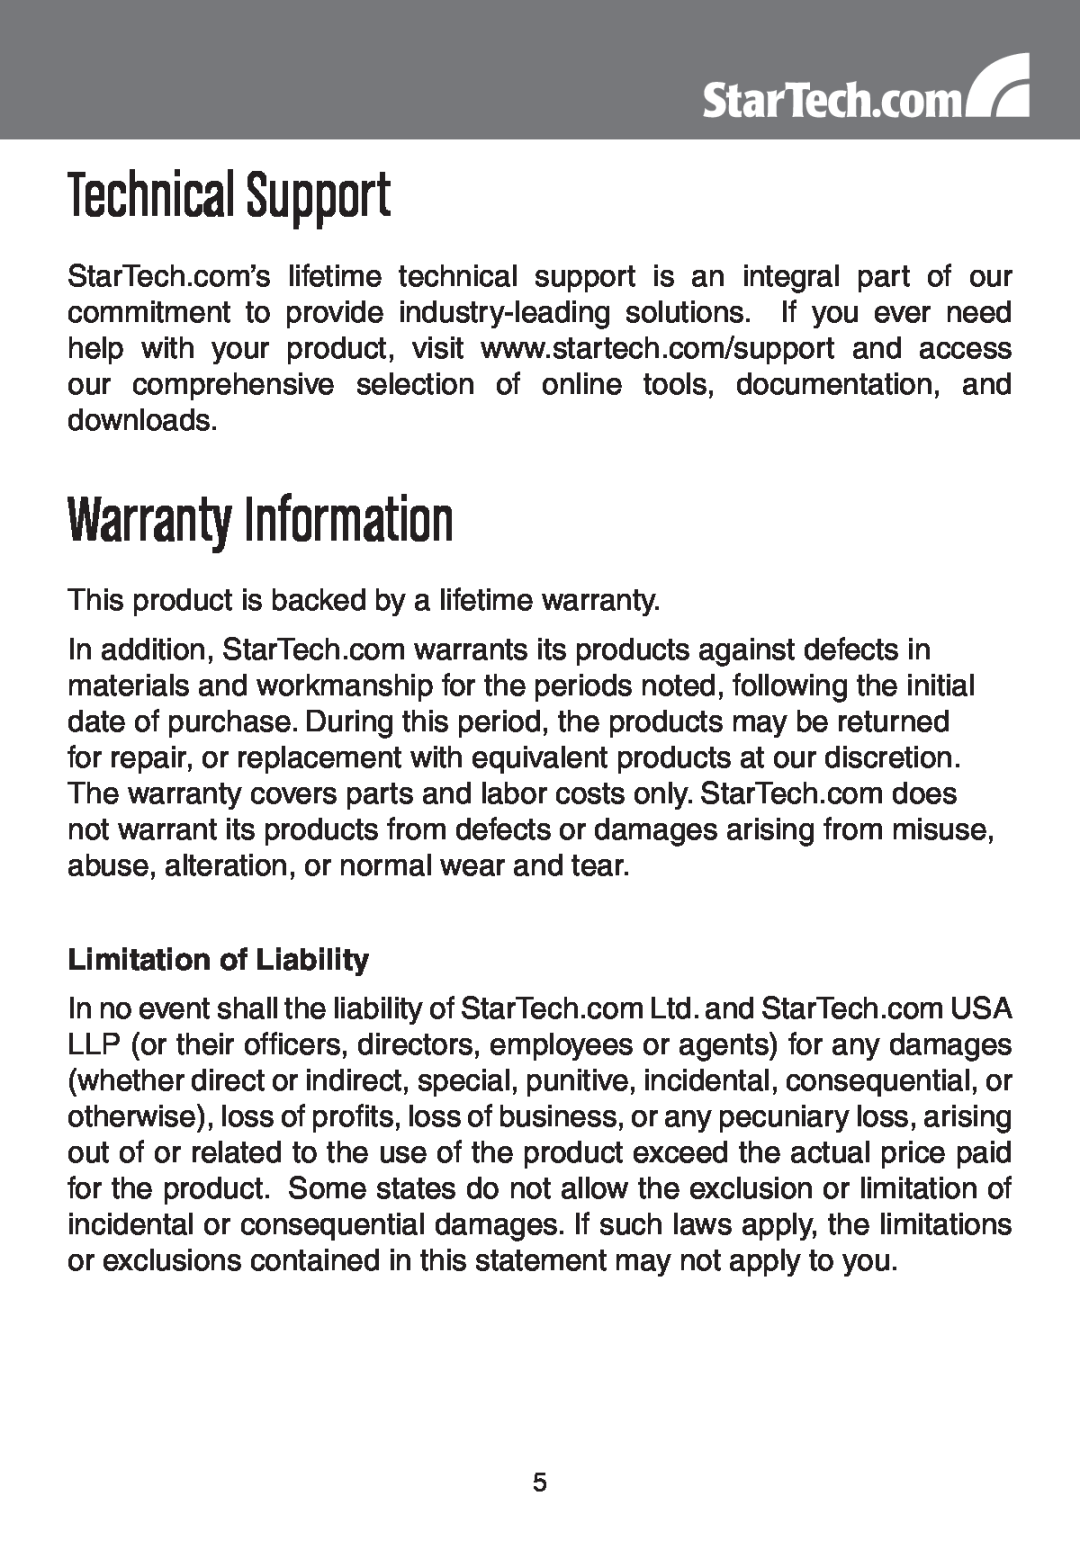 StarTech.com EC1000S instruction manual Technical Support, Warranty Information, Limitation of Liability 